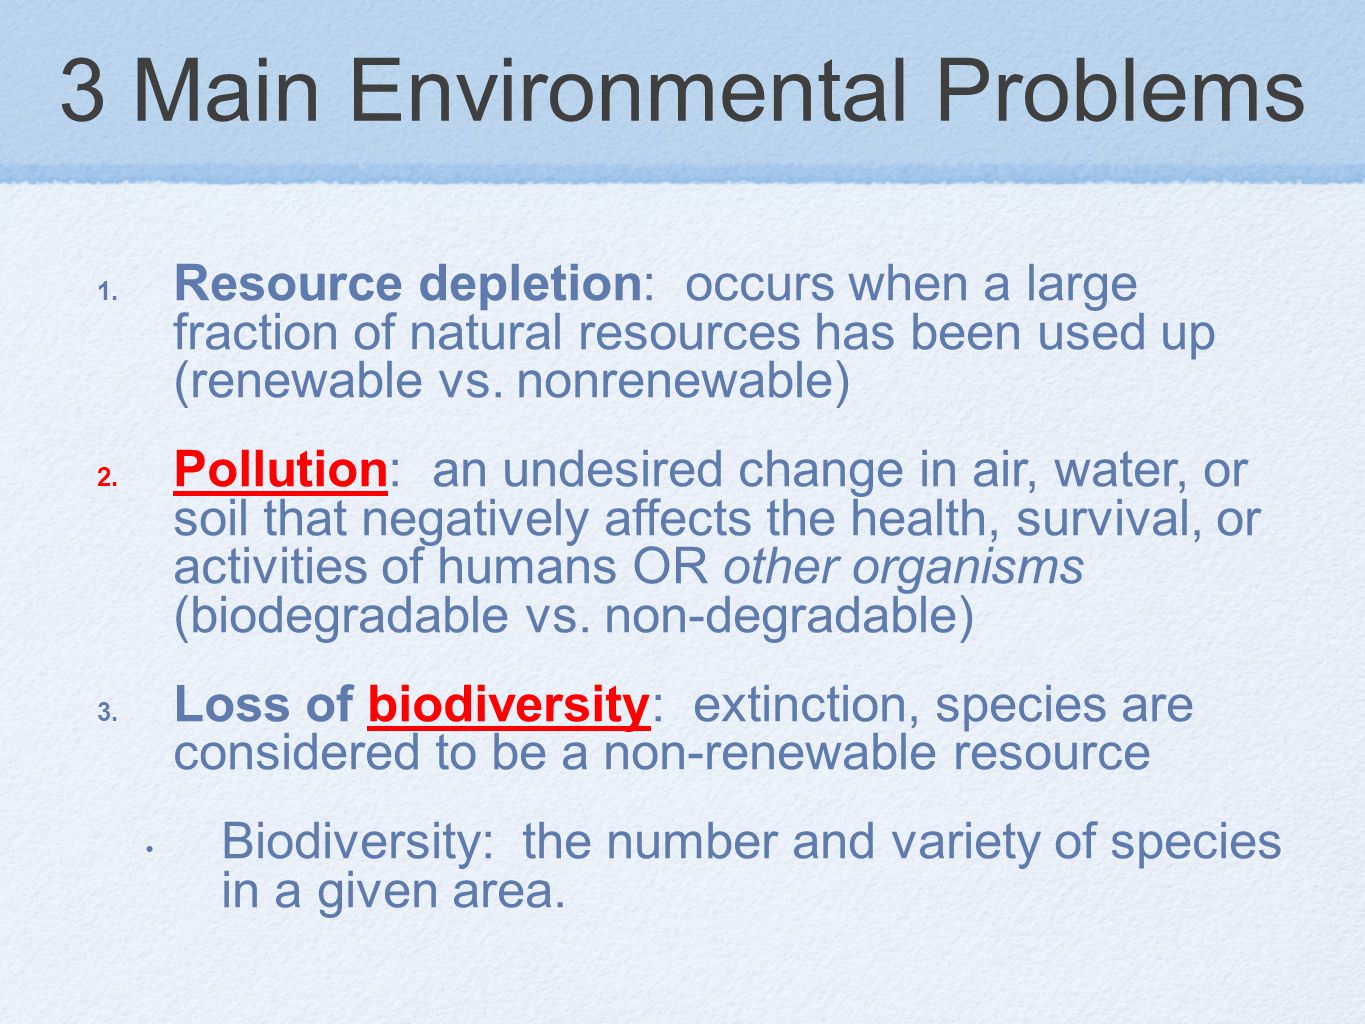 3 Main Environmental Problems